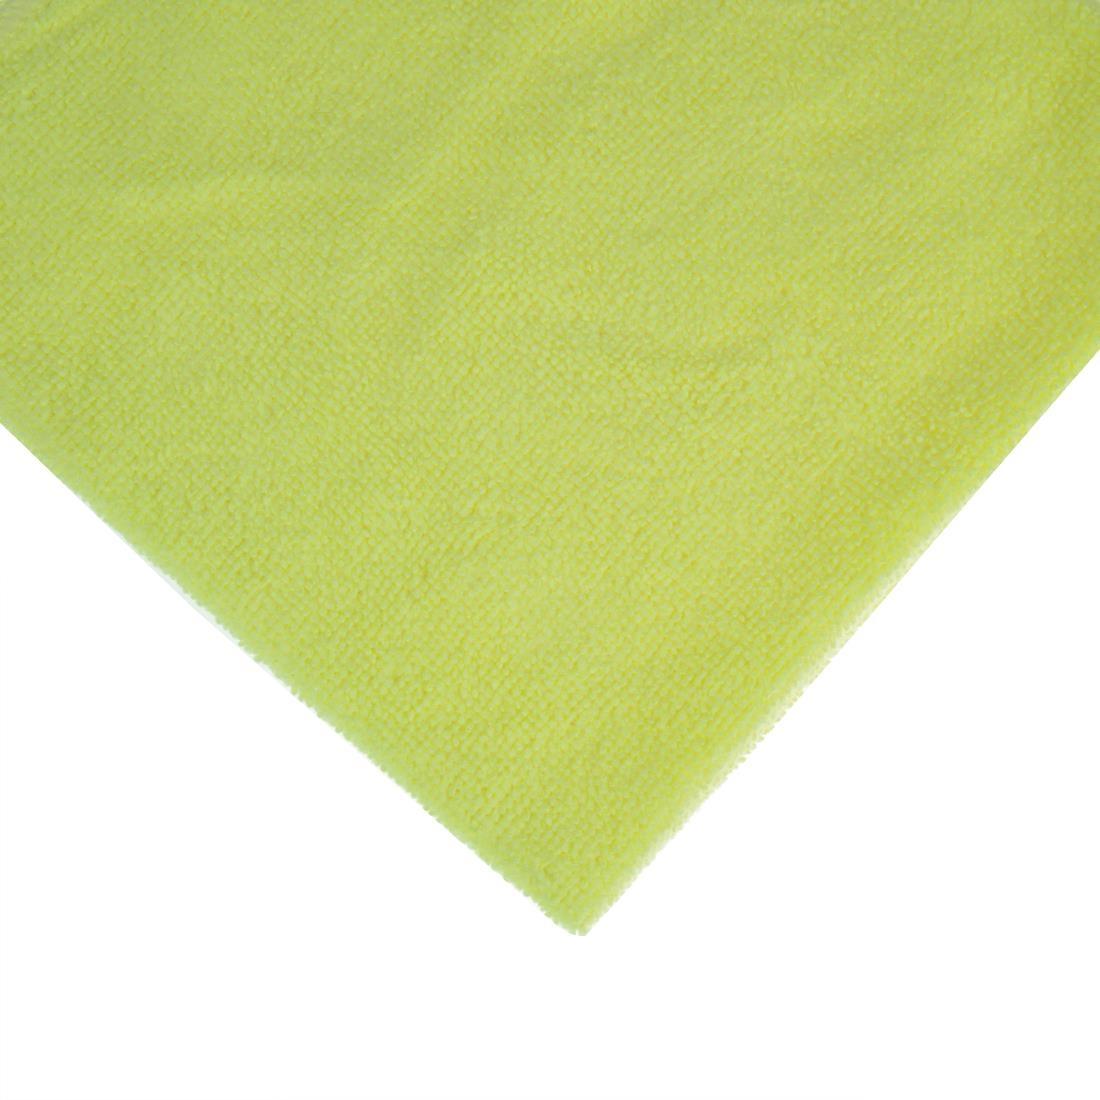 Jantex Microfibre Cloths Yellow (Pack of 5) - DN841  - 3